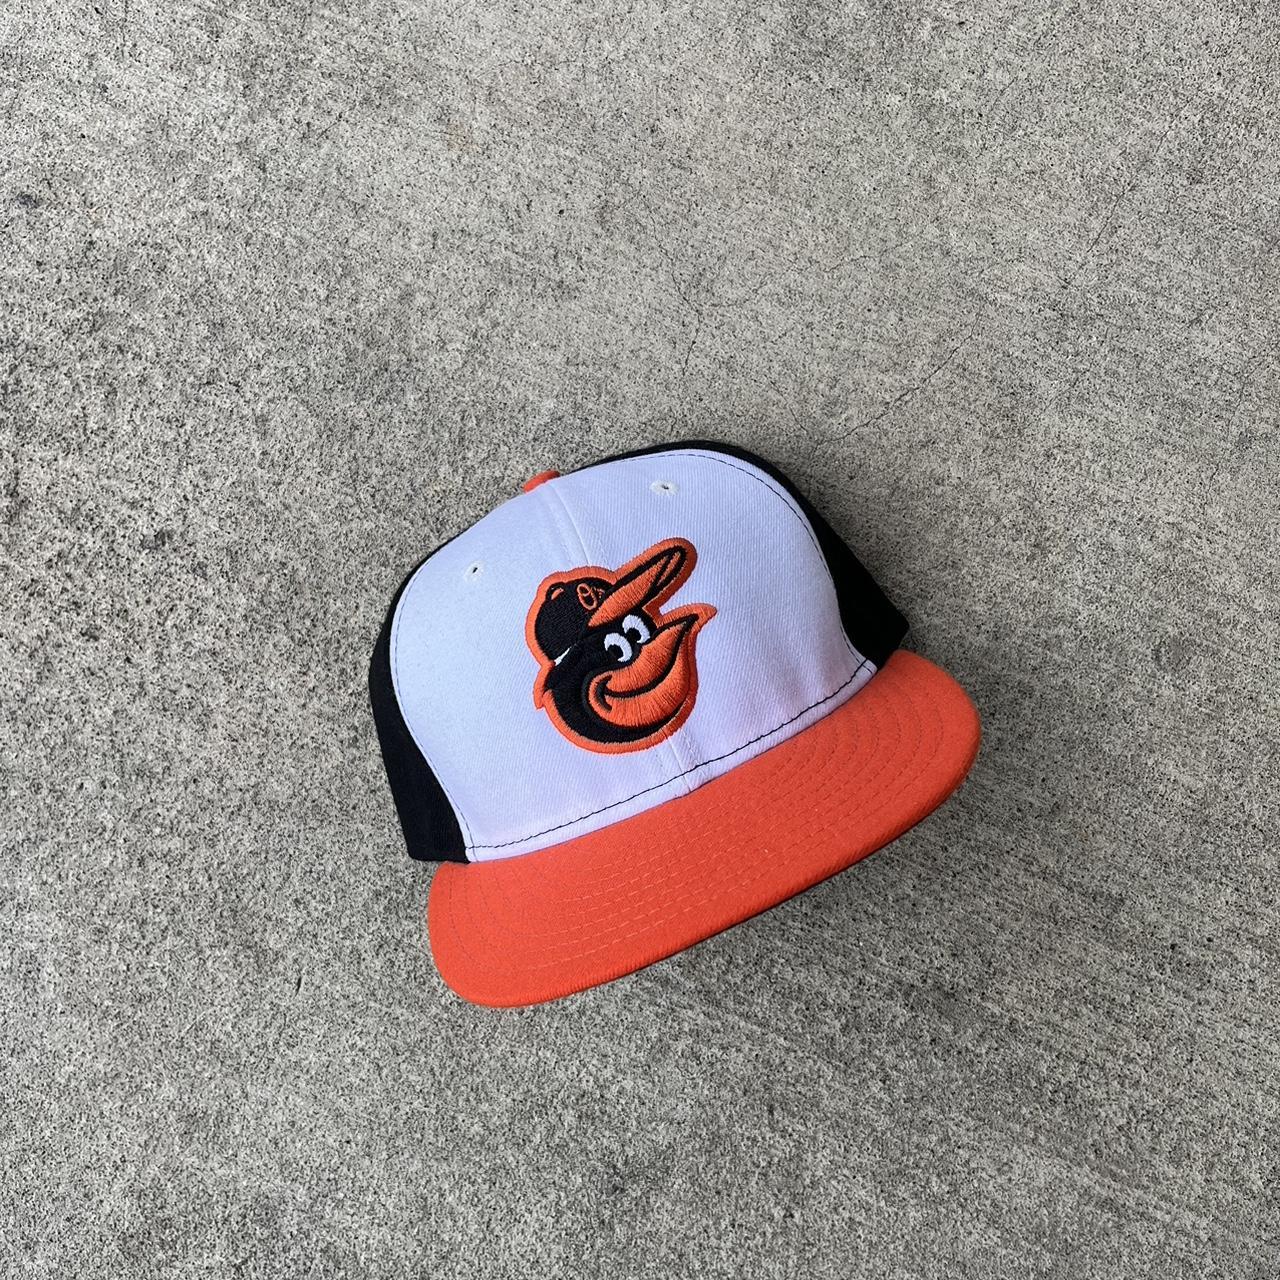 Men's Baltimore Orioles Hats